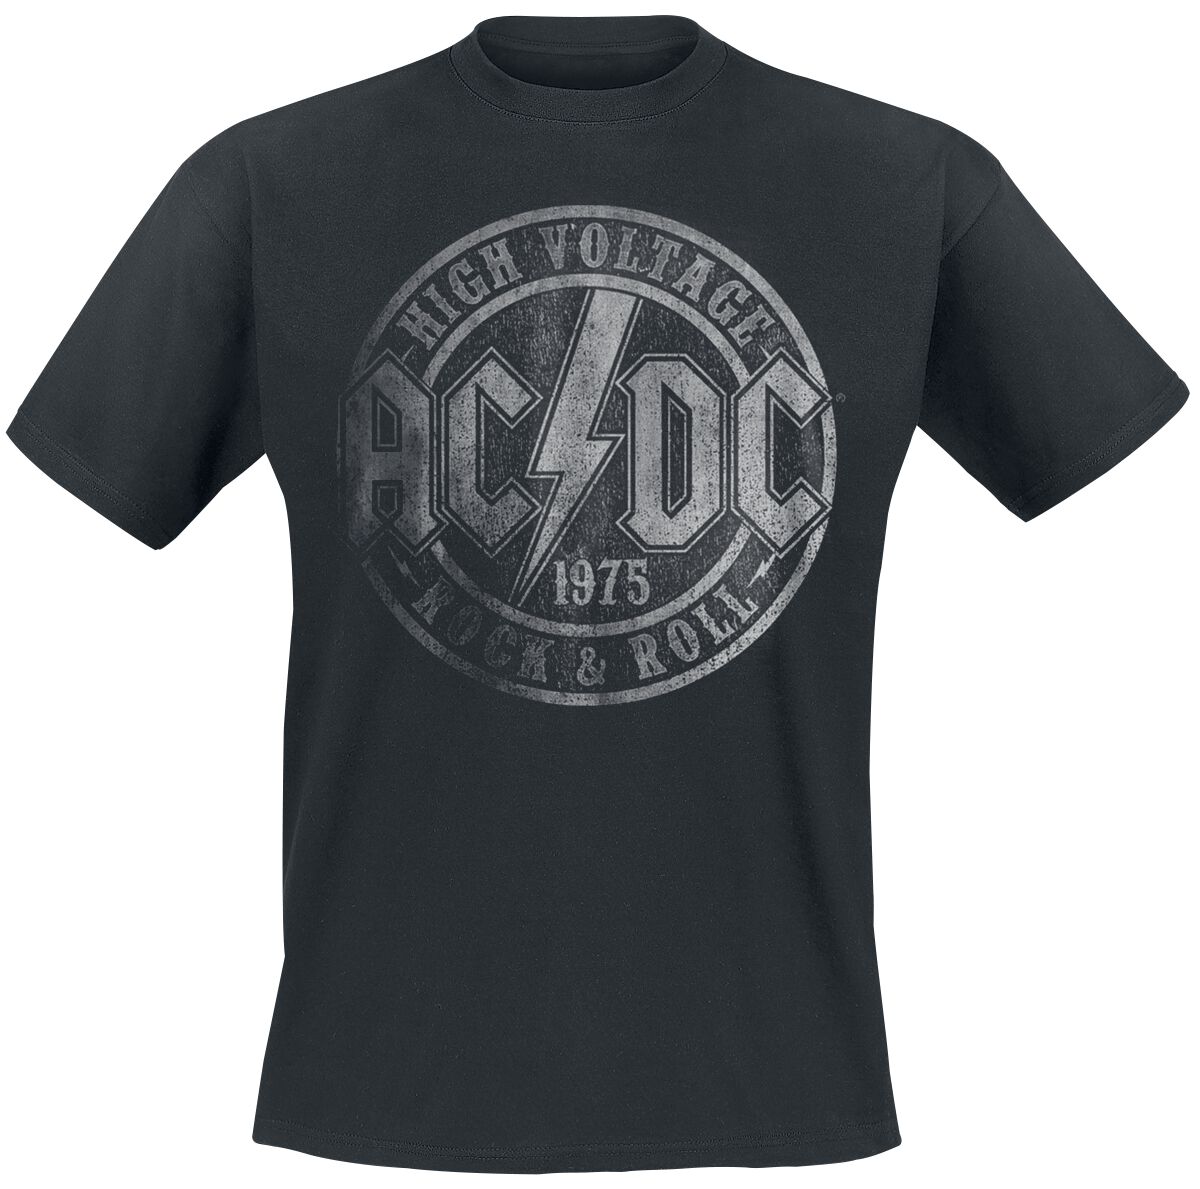 Image of T-Shirt di AC/DC - High Voltage 1975 - S a XXL - Uomo - nero